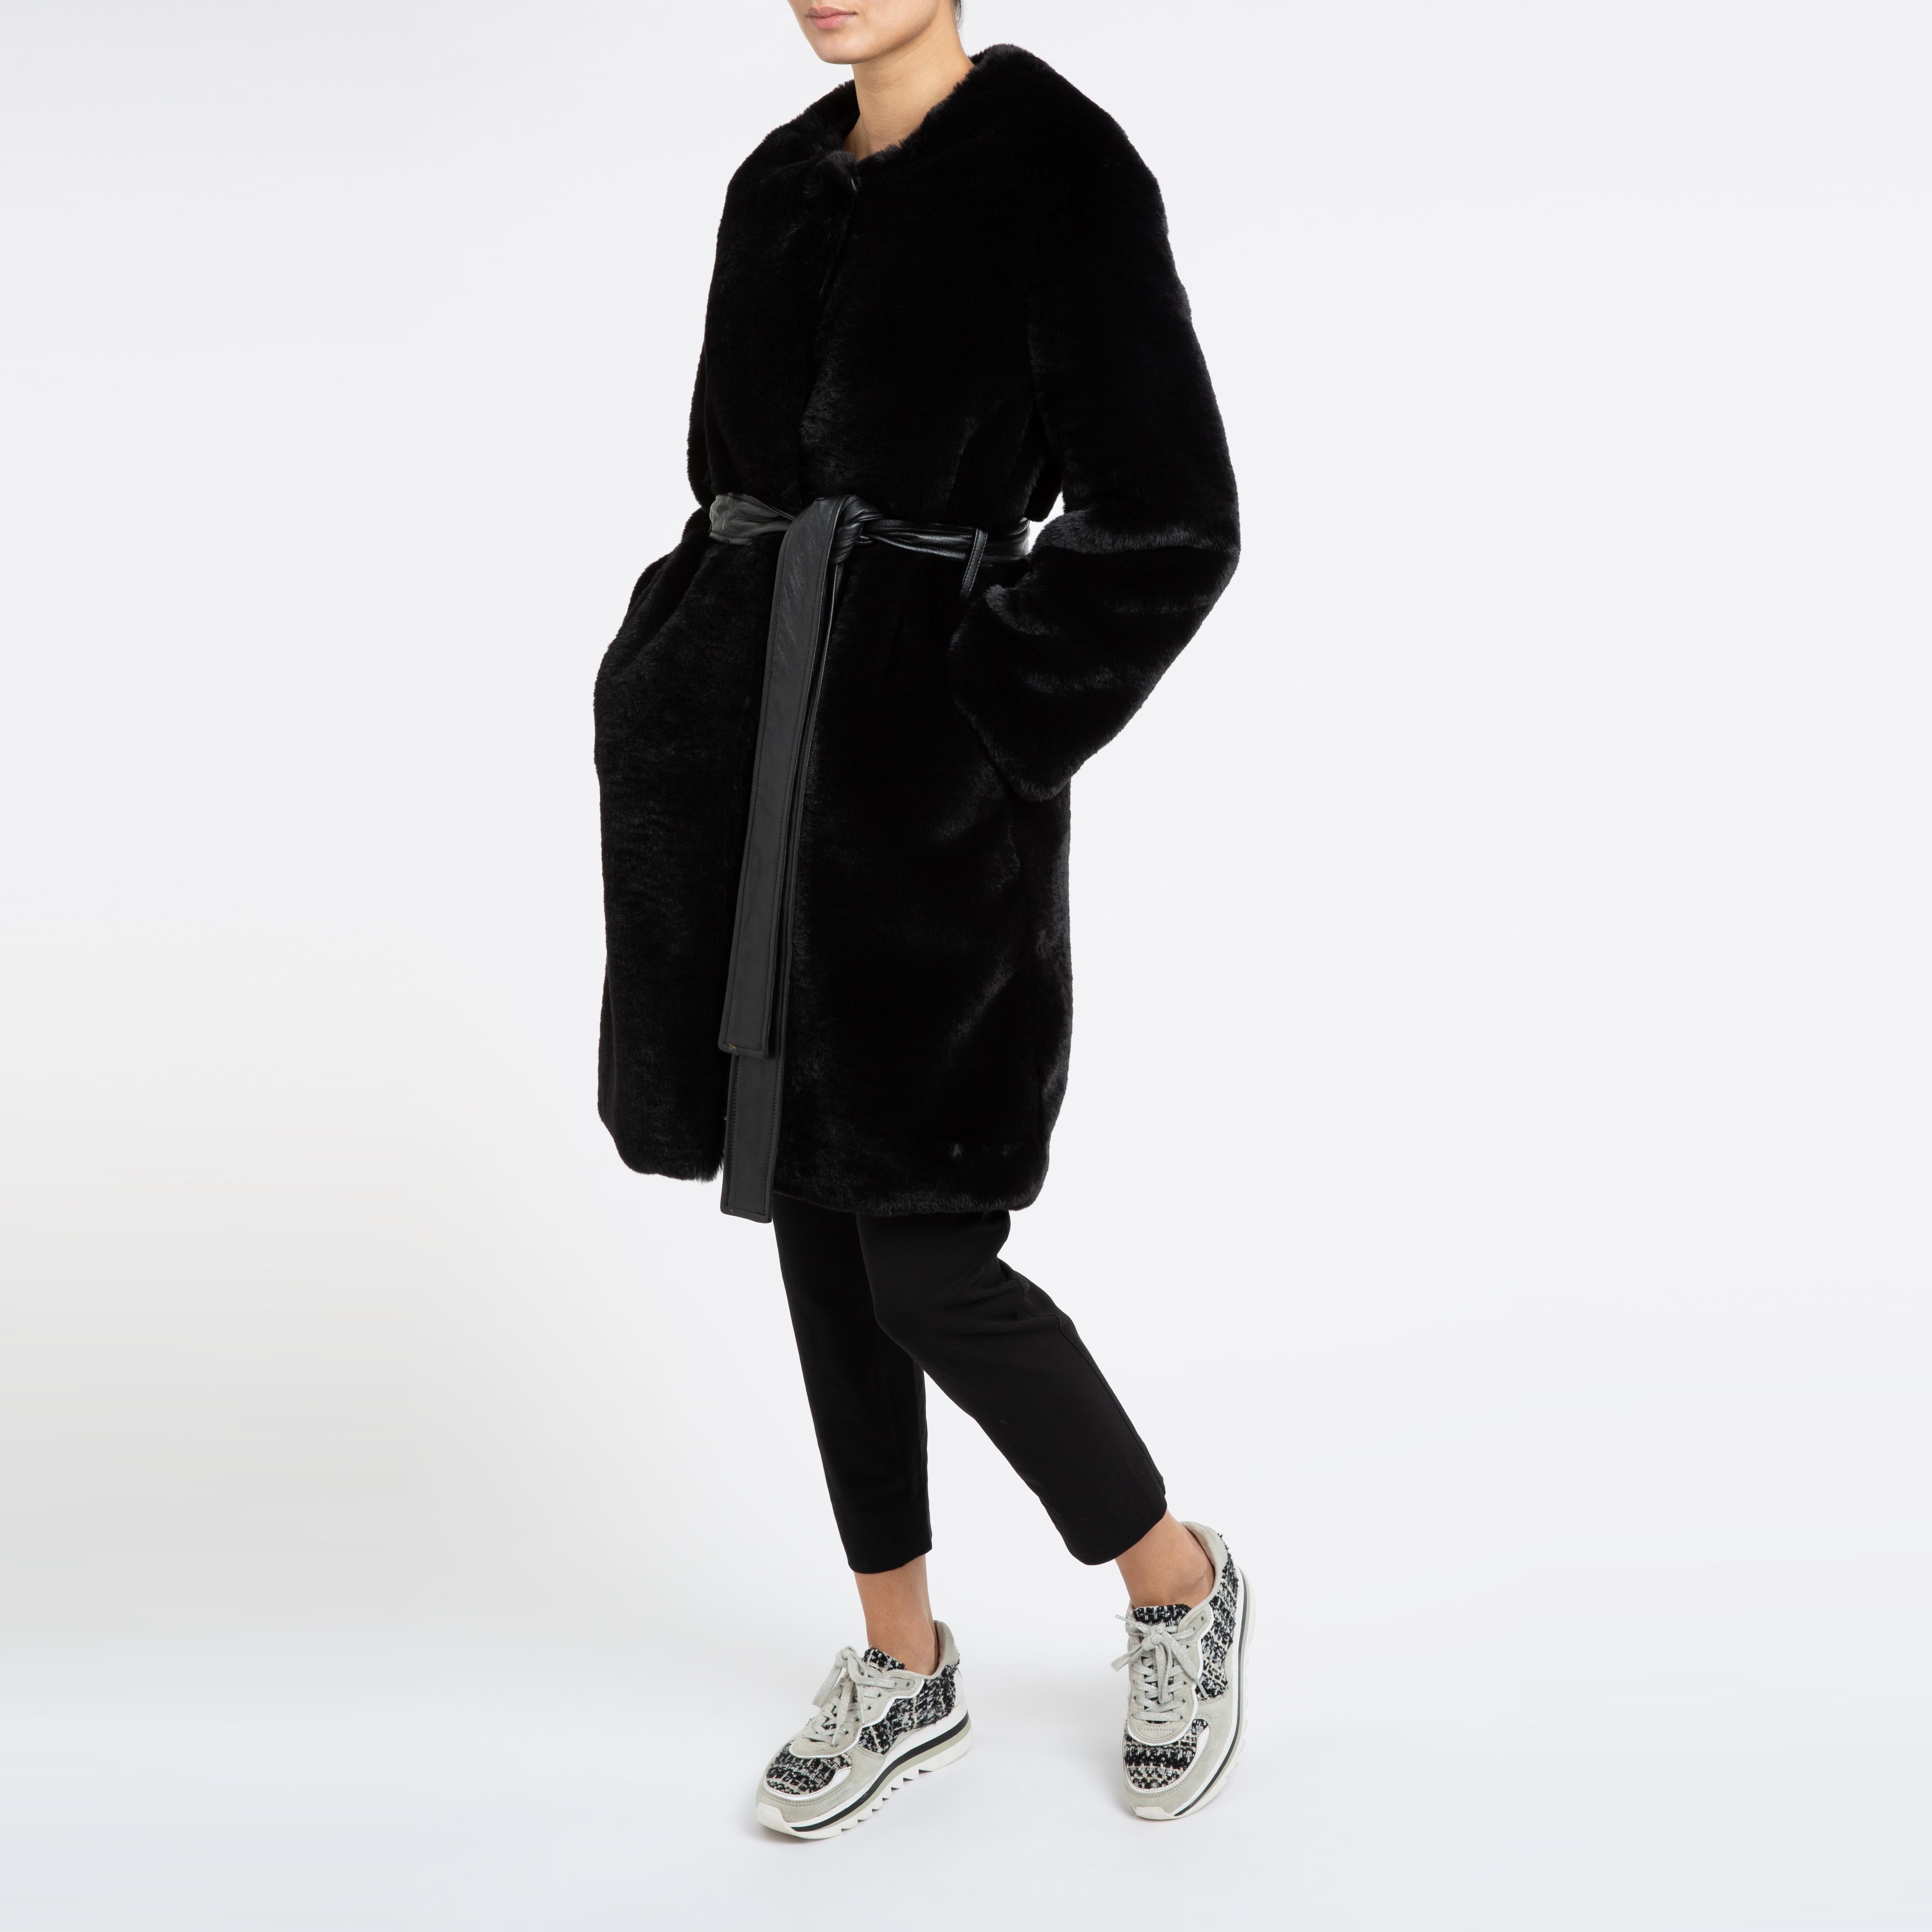 Verheyen London Serena  Collarless Faux Fur Coat in Black - Size uk 8  9